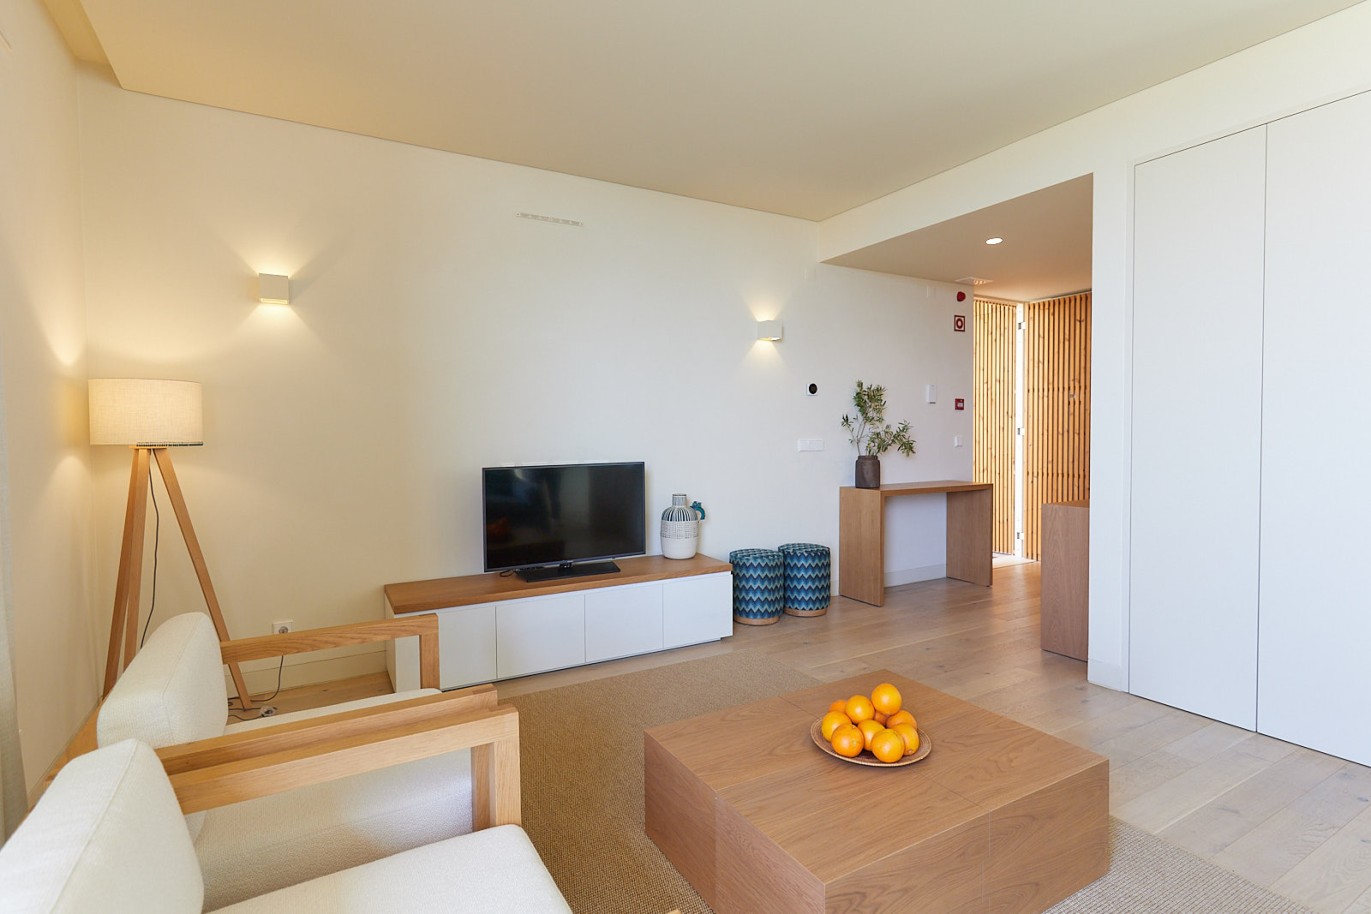 2 bedroom apartment in resort, for sale in Porches, Algarve_229215